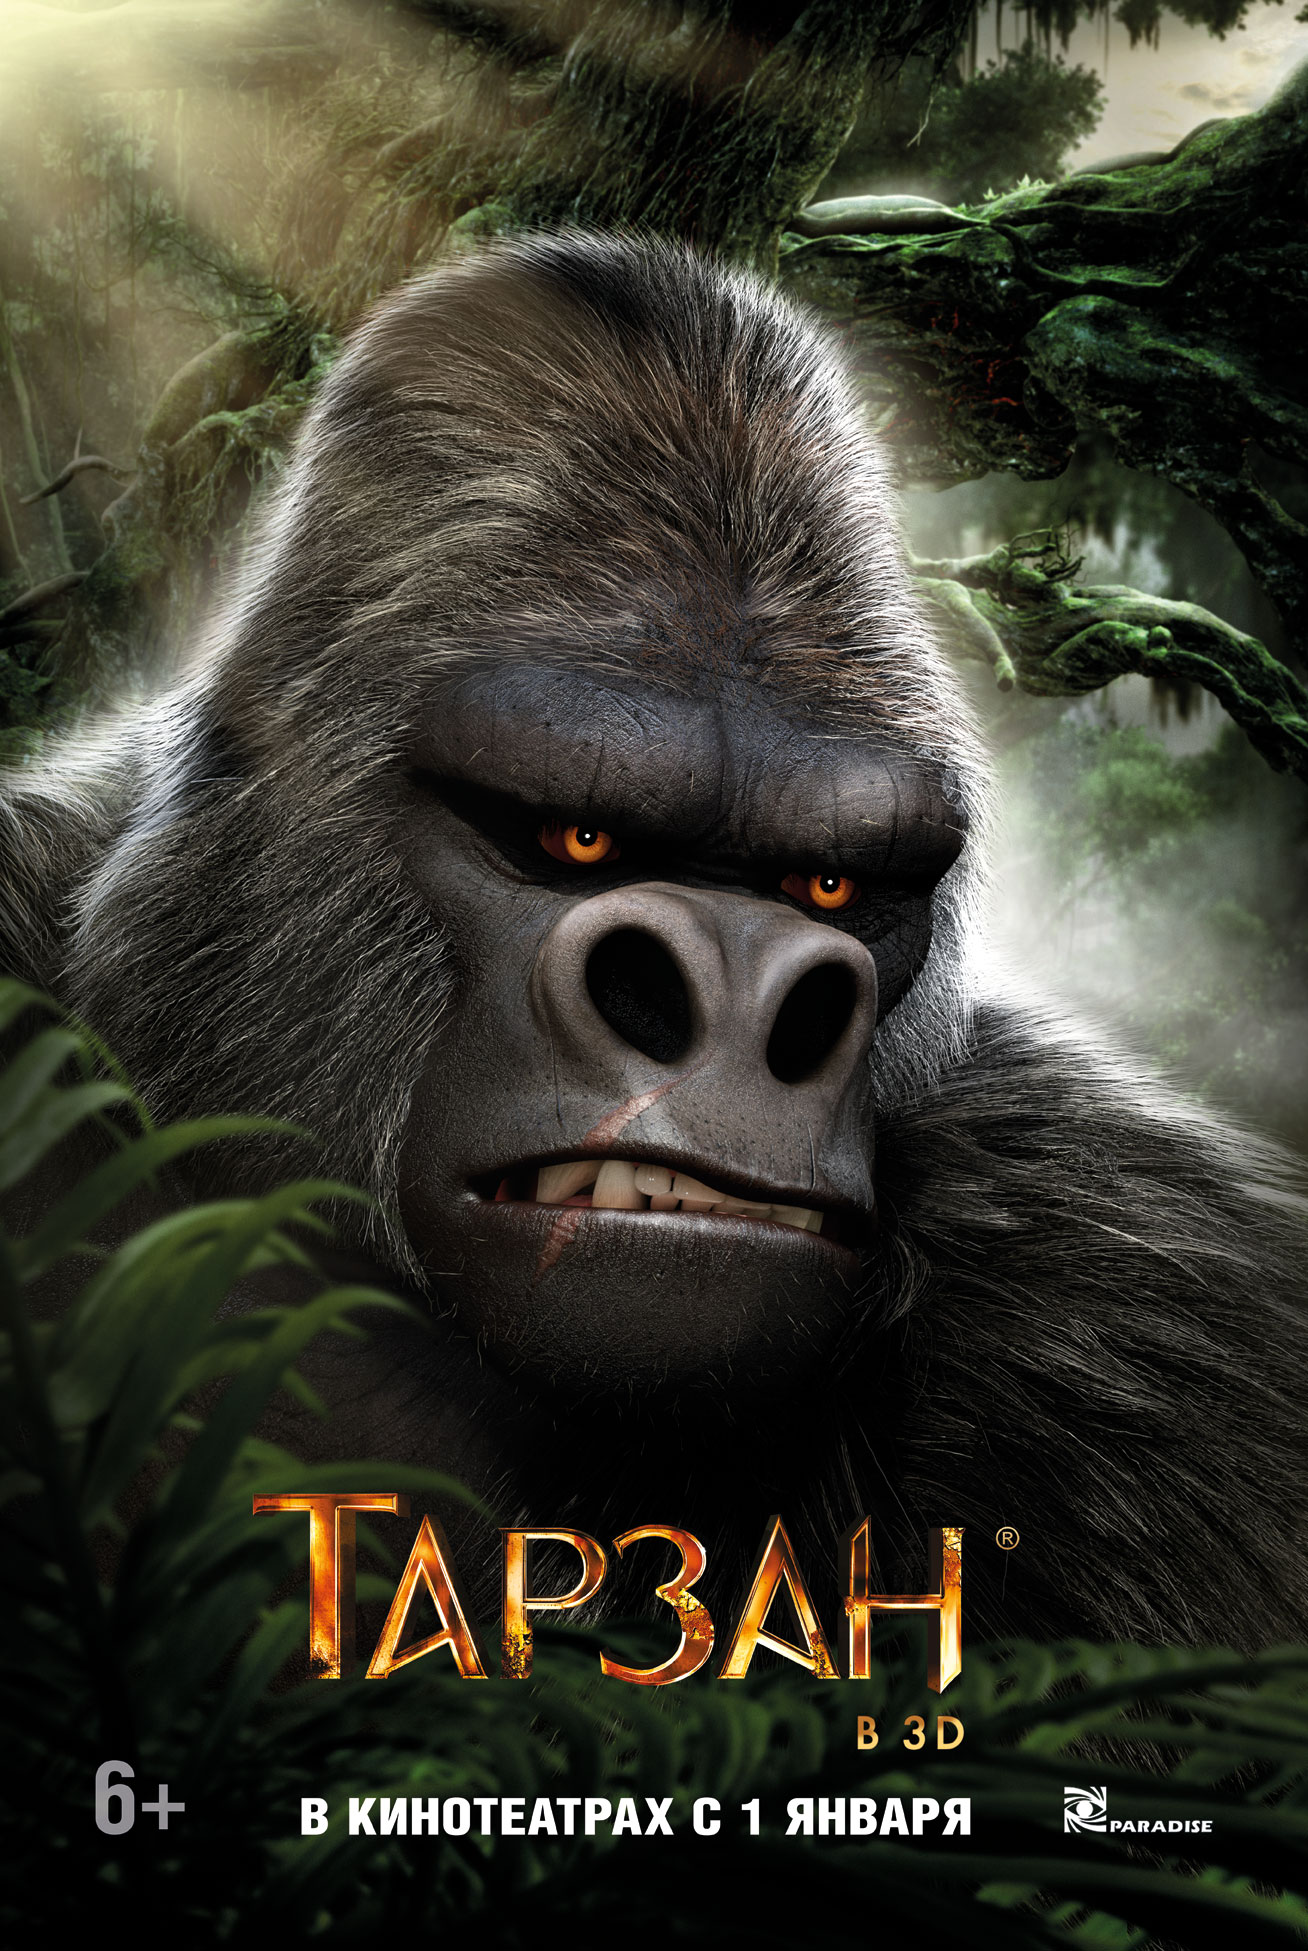 'Legend Of Tarzan' IMAX Trailer: The Ape Man's Origin Story Gets Revealed